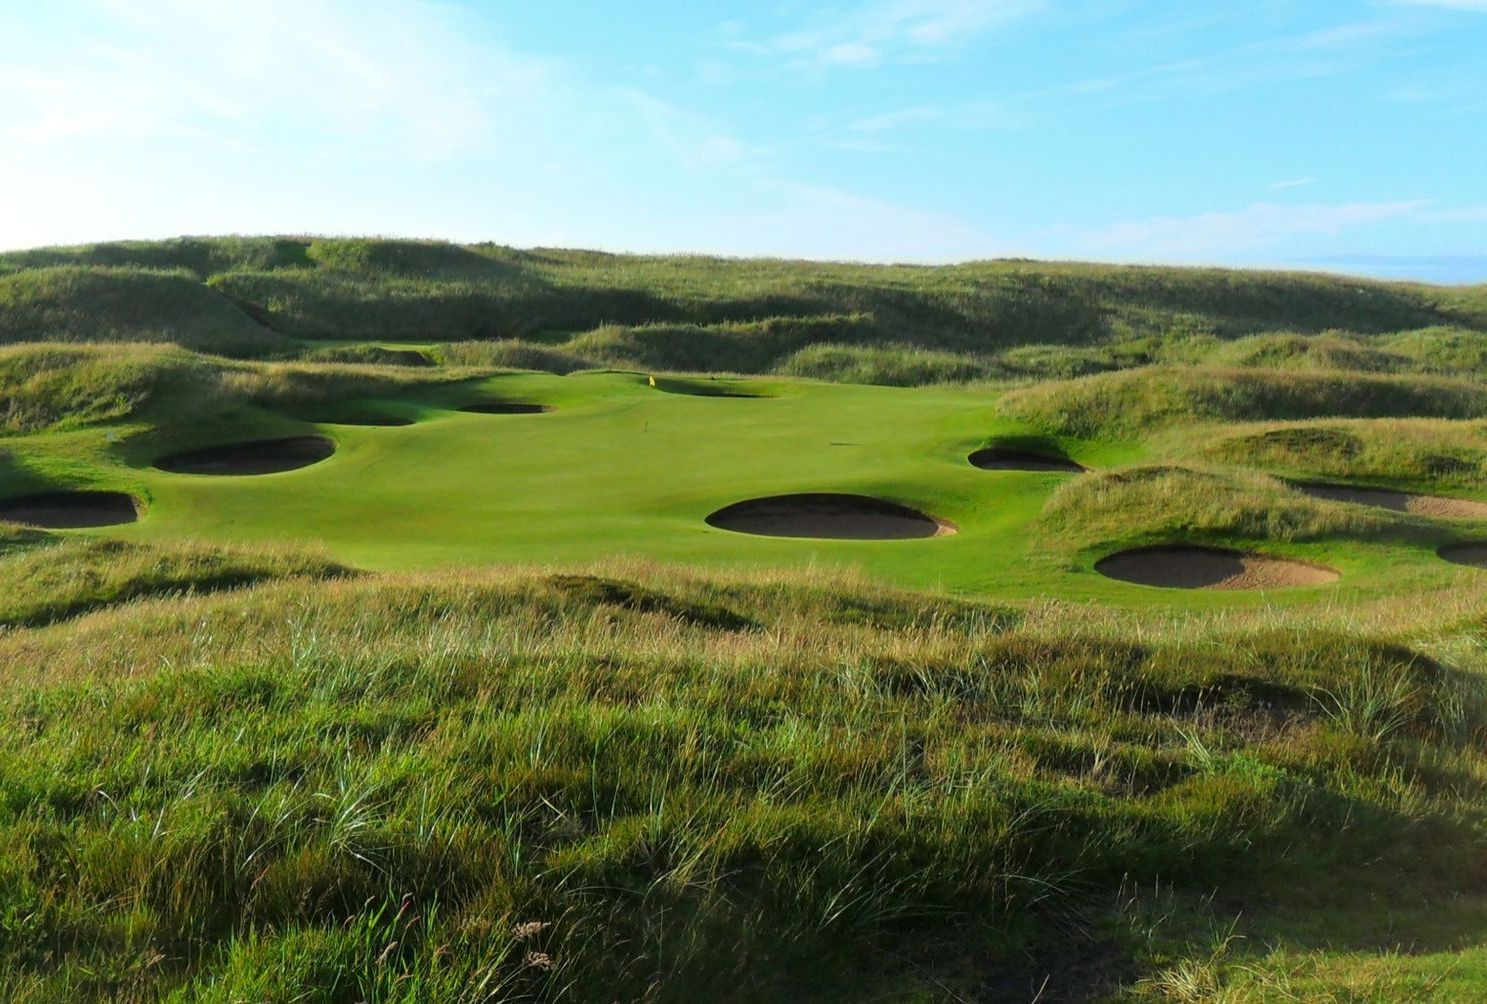 Turnberry Golf Course Scotland - Scotland Golf Coast Tours